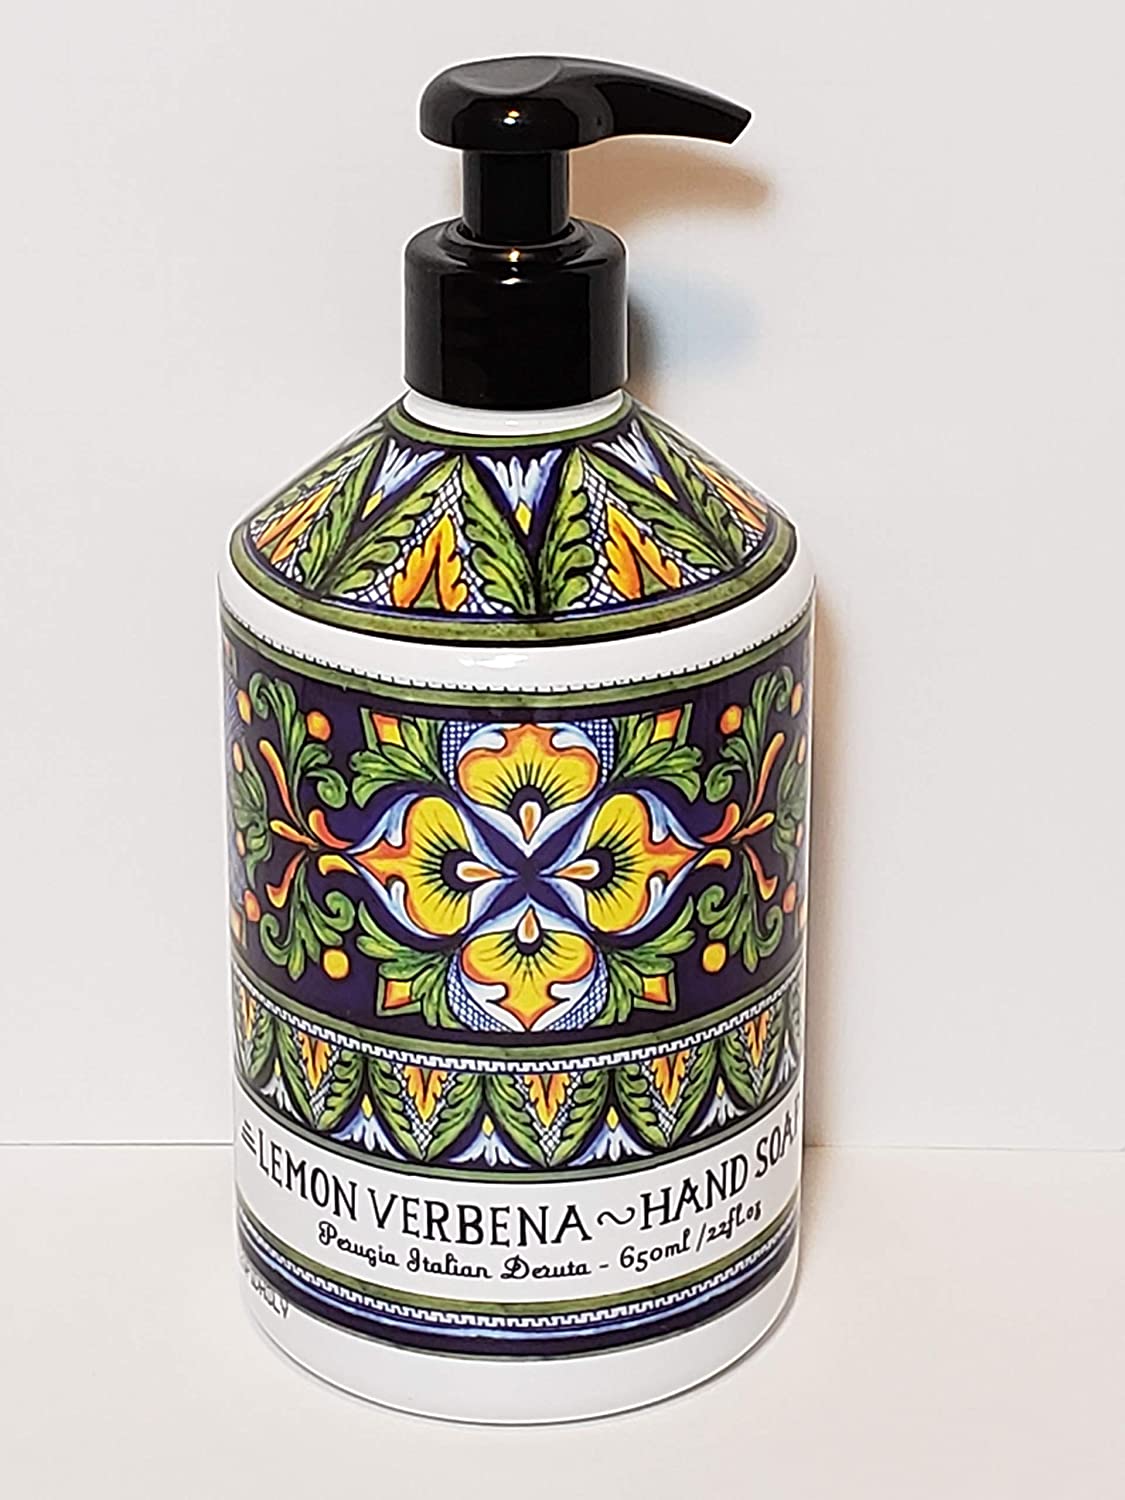 Sicilian Deruta Hand Soap, 21.5 fl oz, 3-Pack